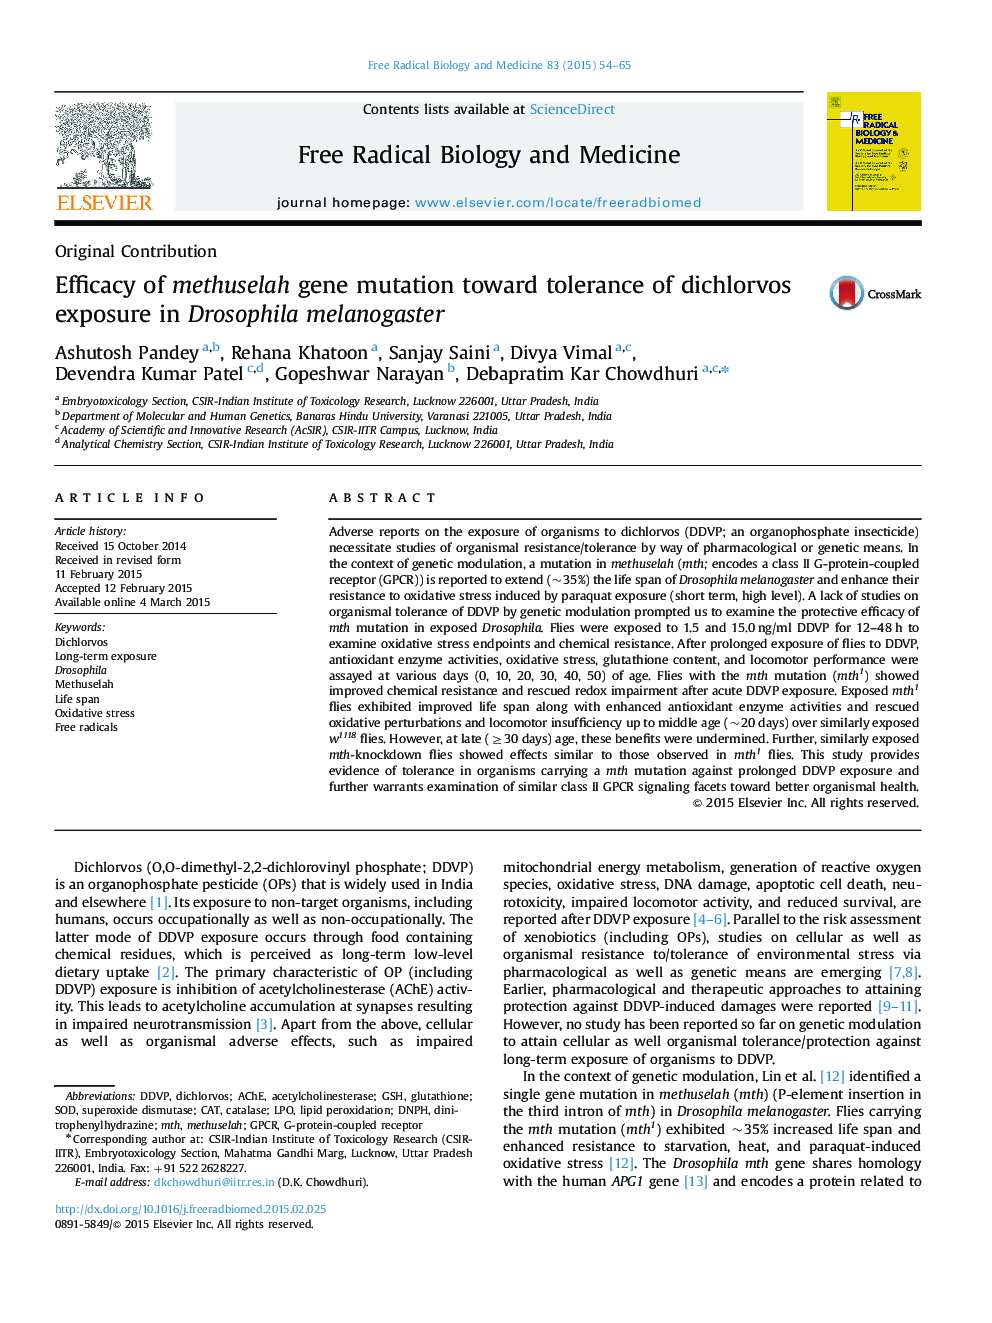 Efficacy of methuselah gene mutation toward tolerance of dichlorvos exposure in Drosophila melanogaster